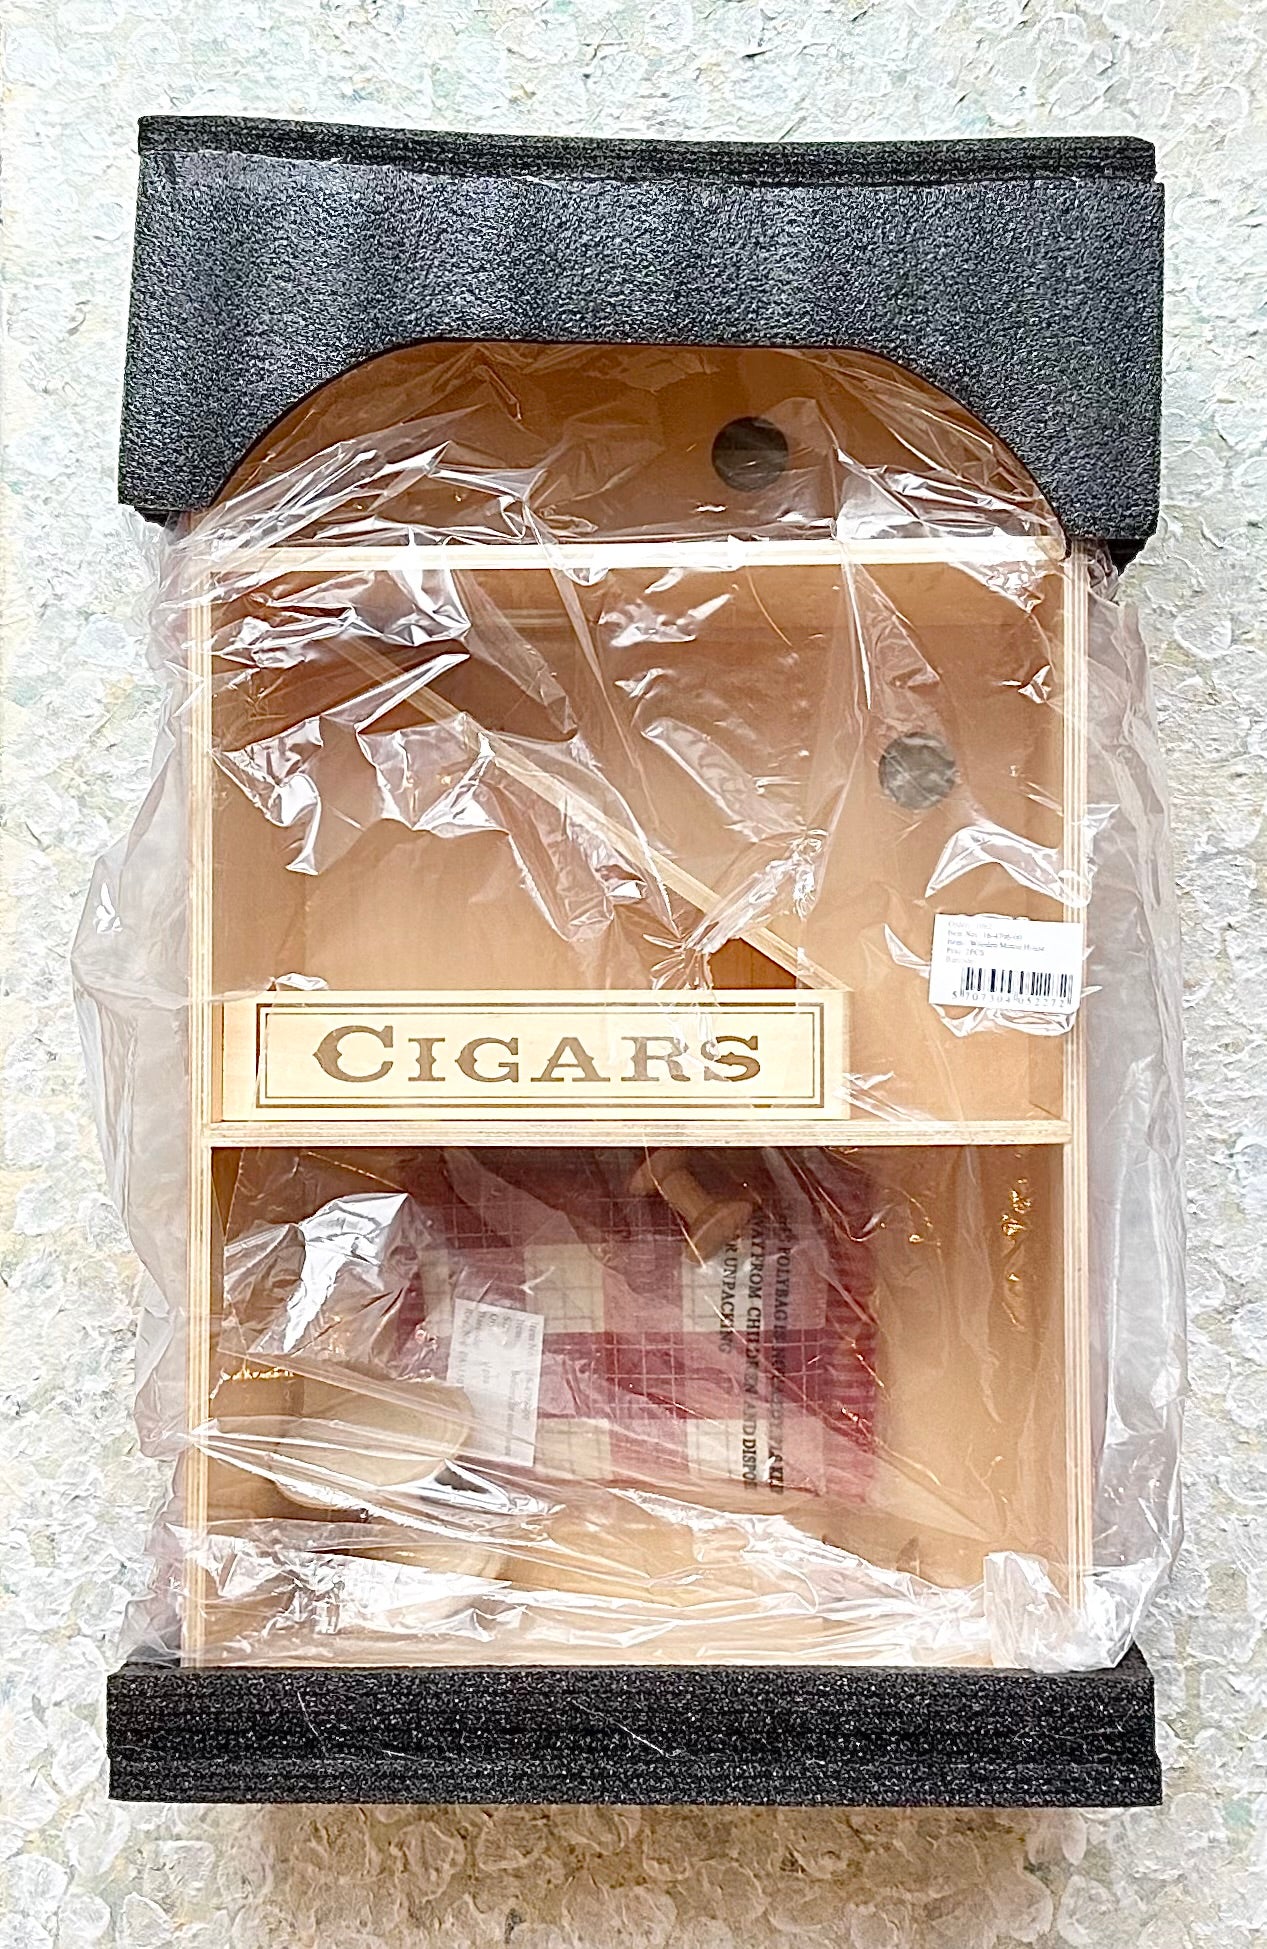 Cigar Mouse House - 2014